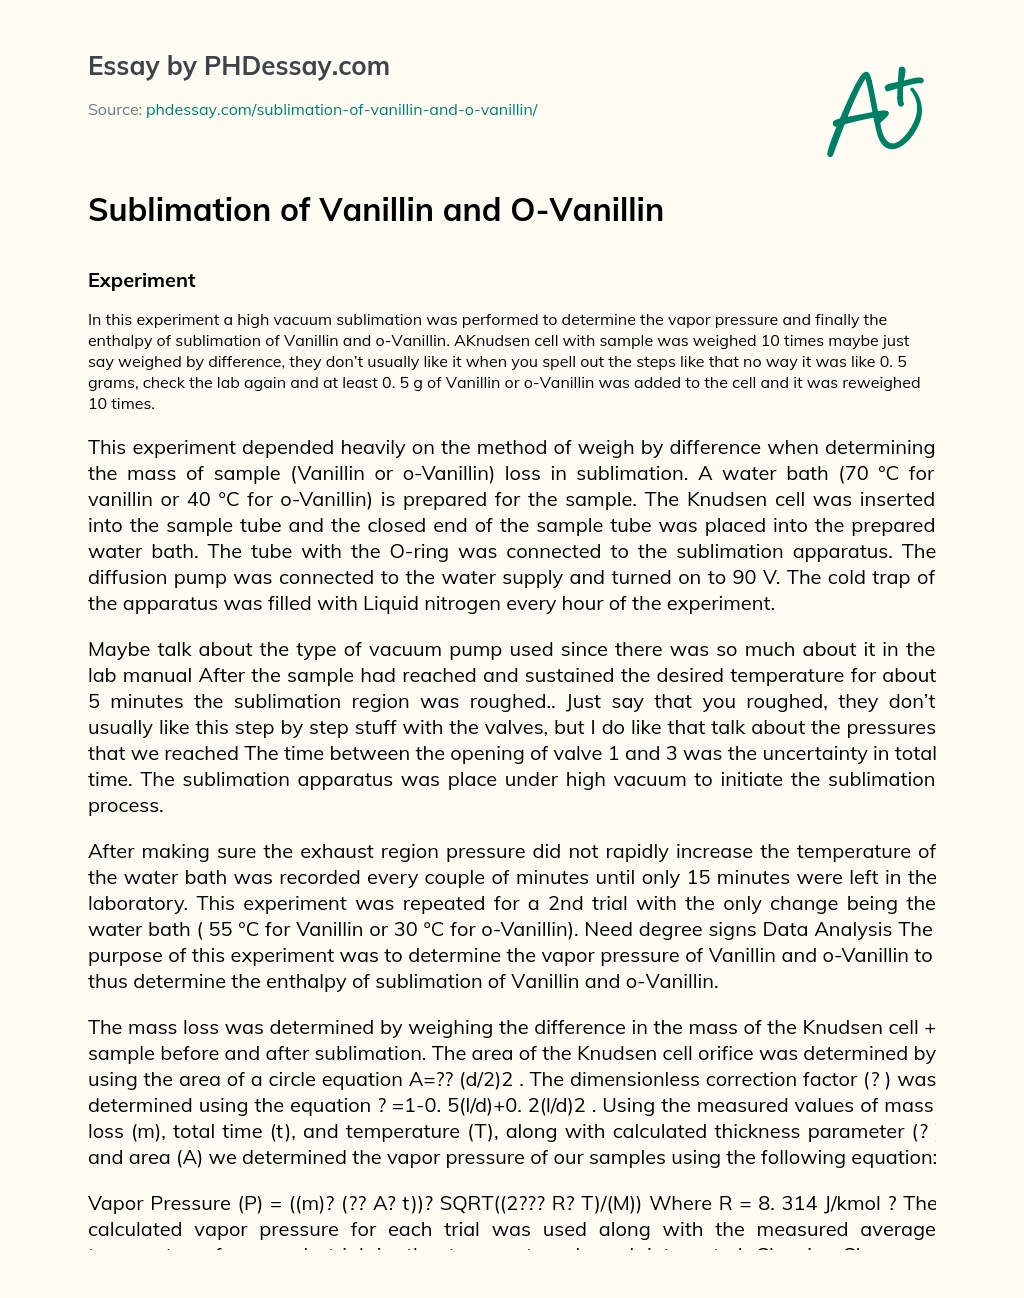 Sublimation of Vanillin and O-Vanillin essay